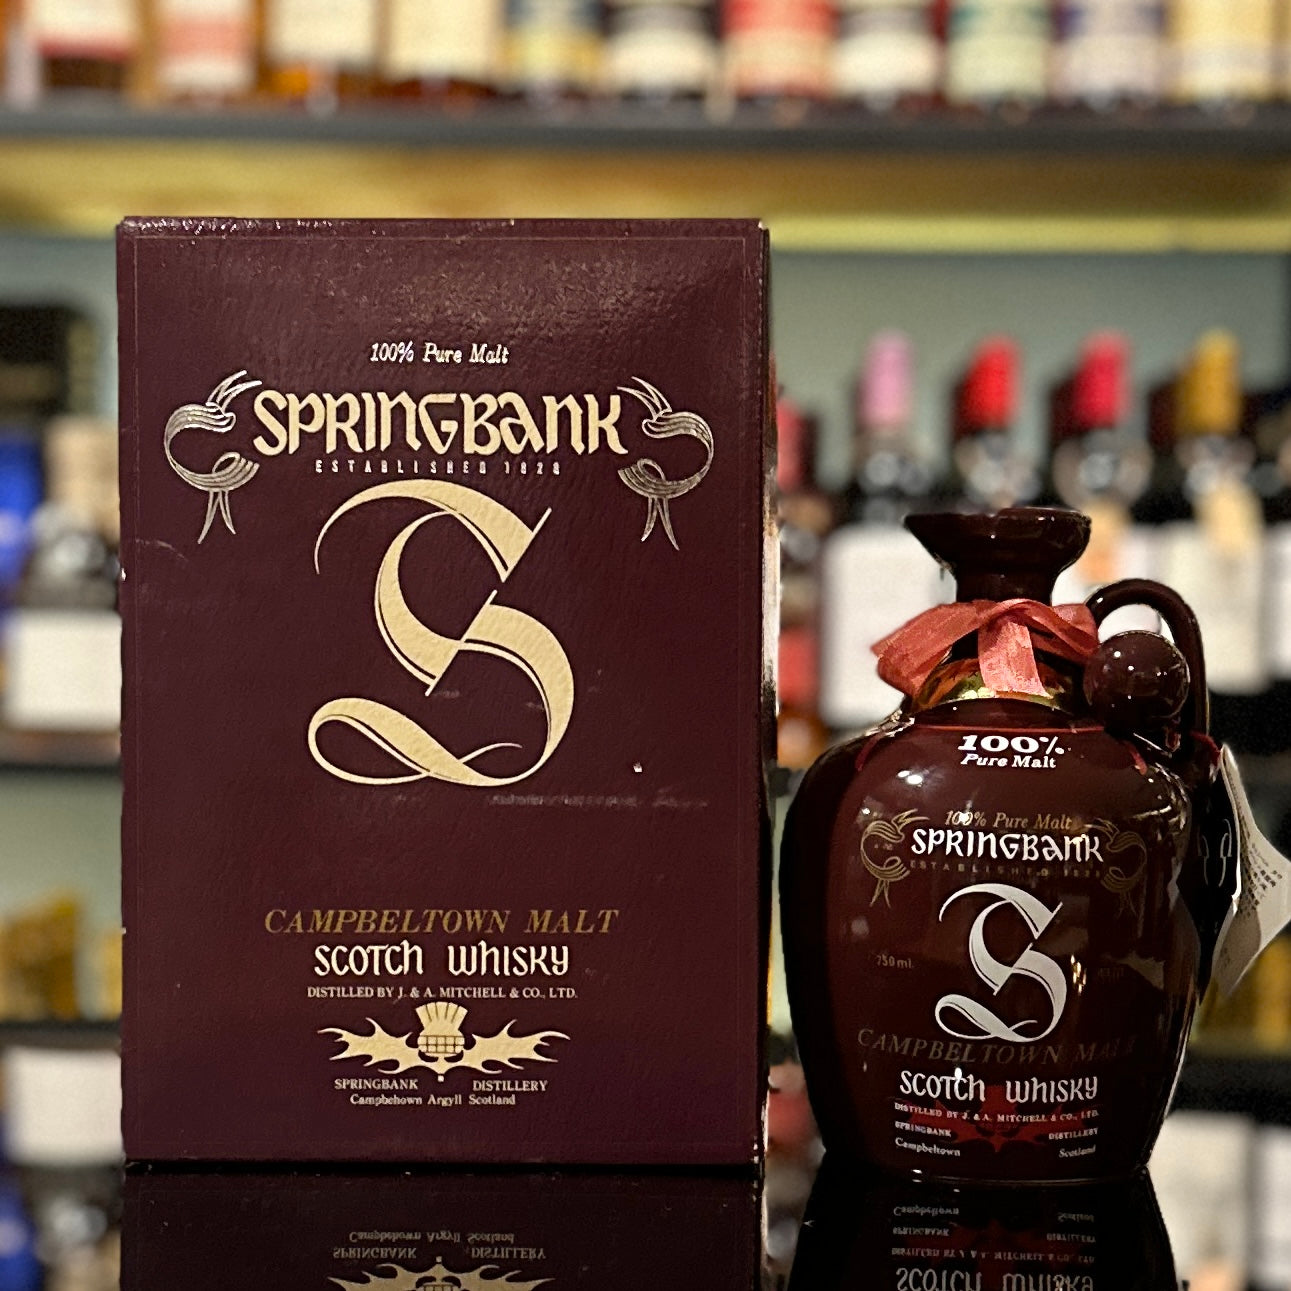 Springbank 100% Pure Malt Single Malt Scotch Whisky – The Central 